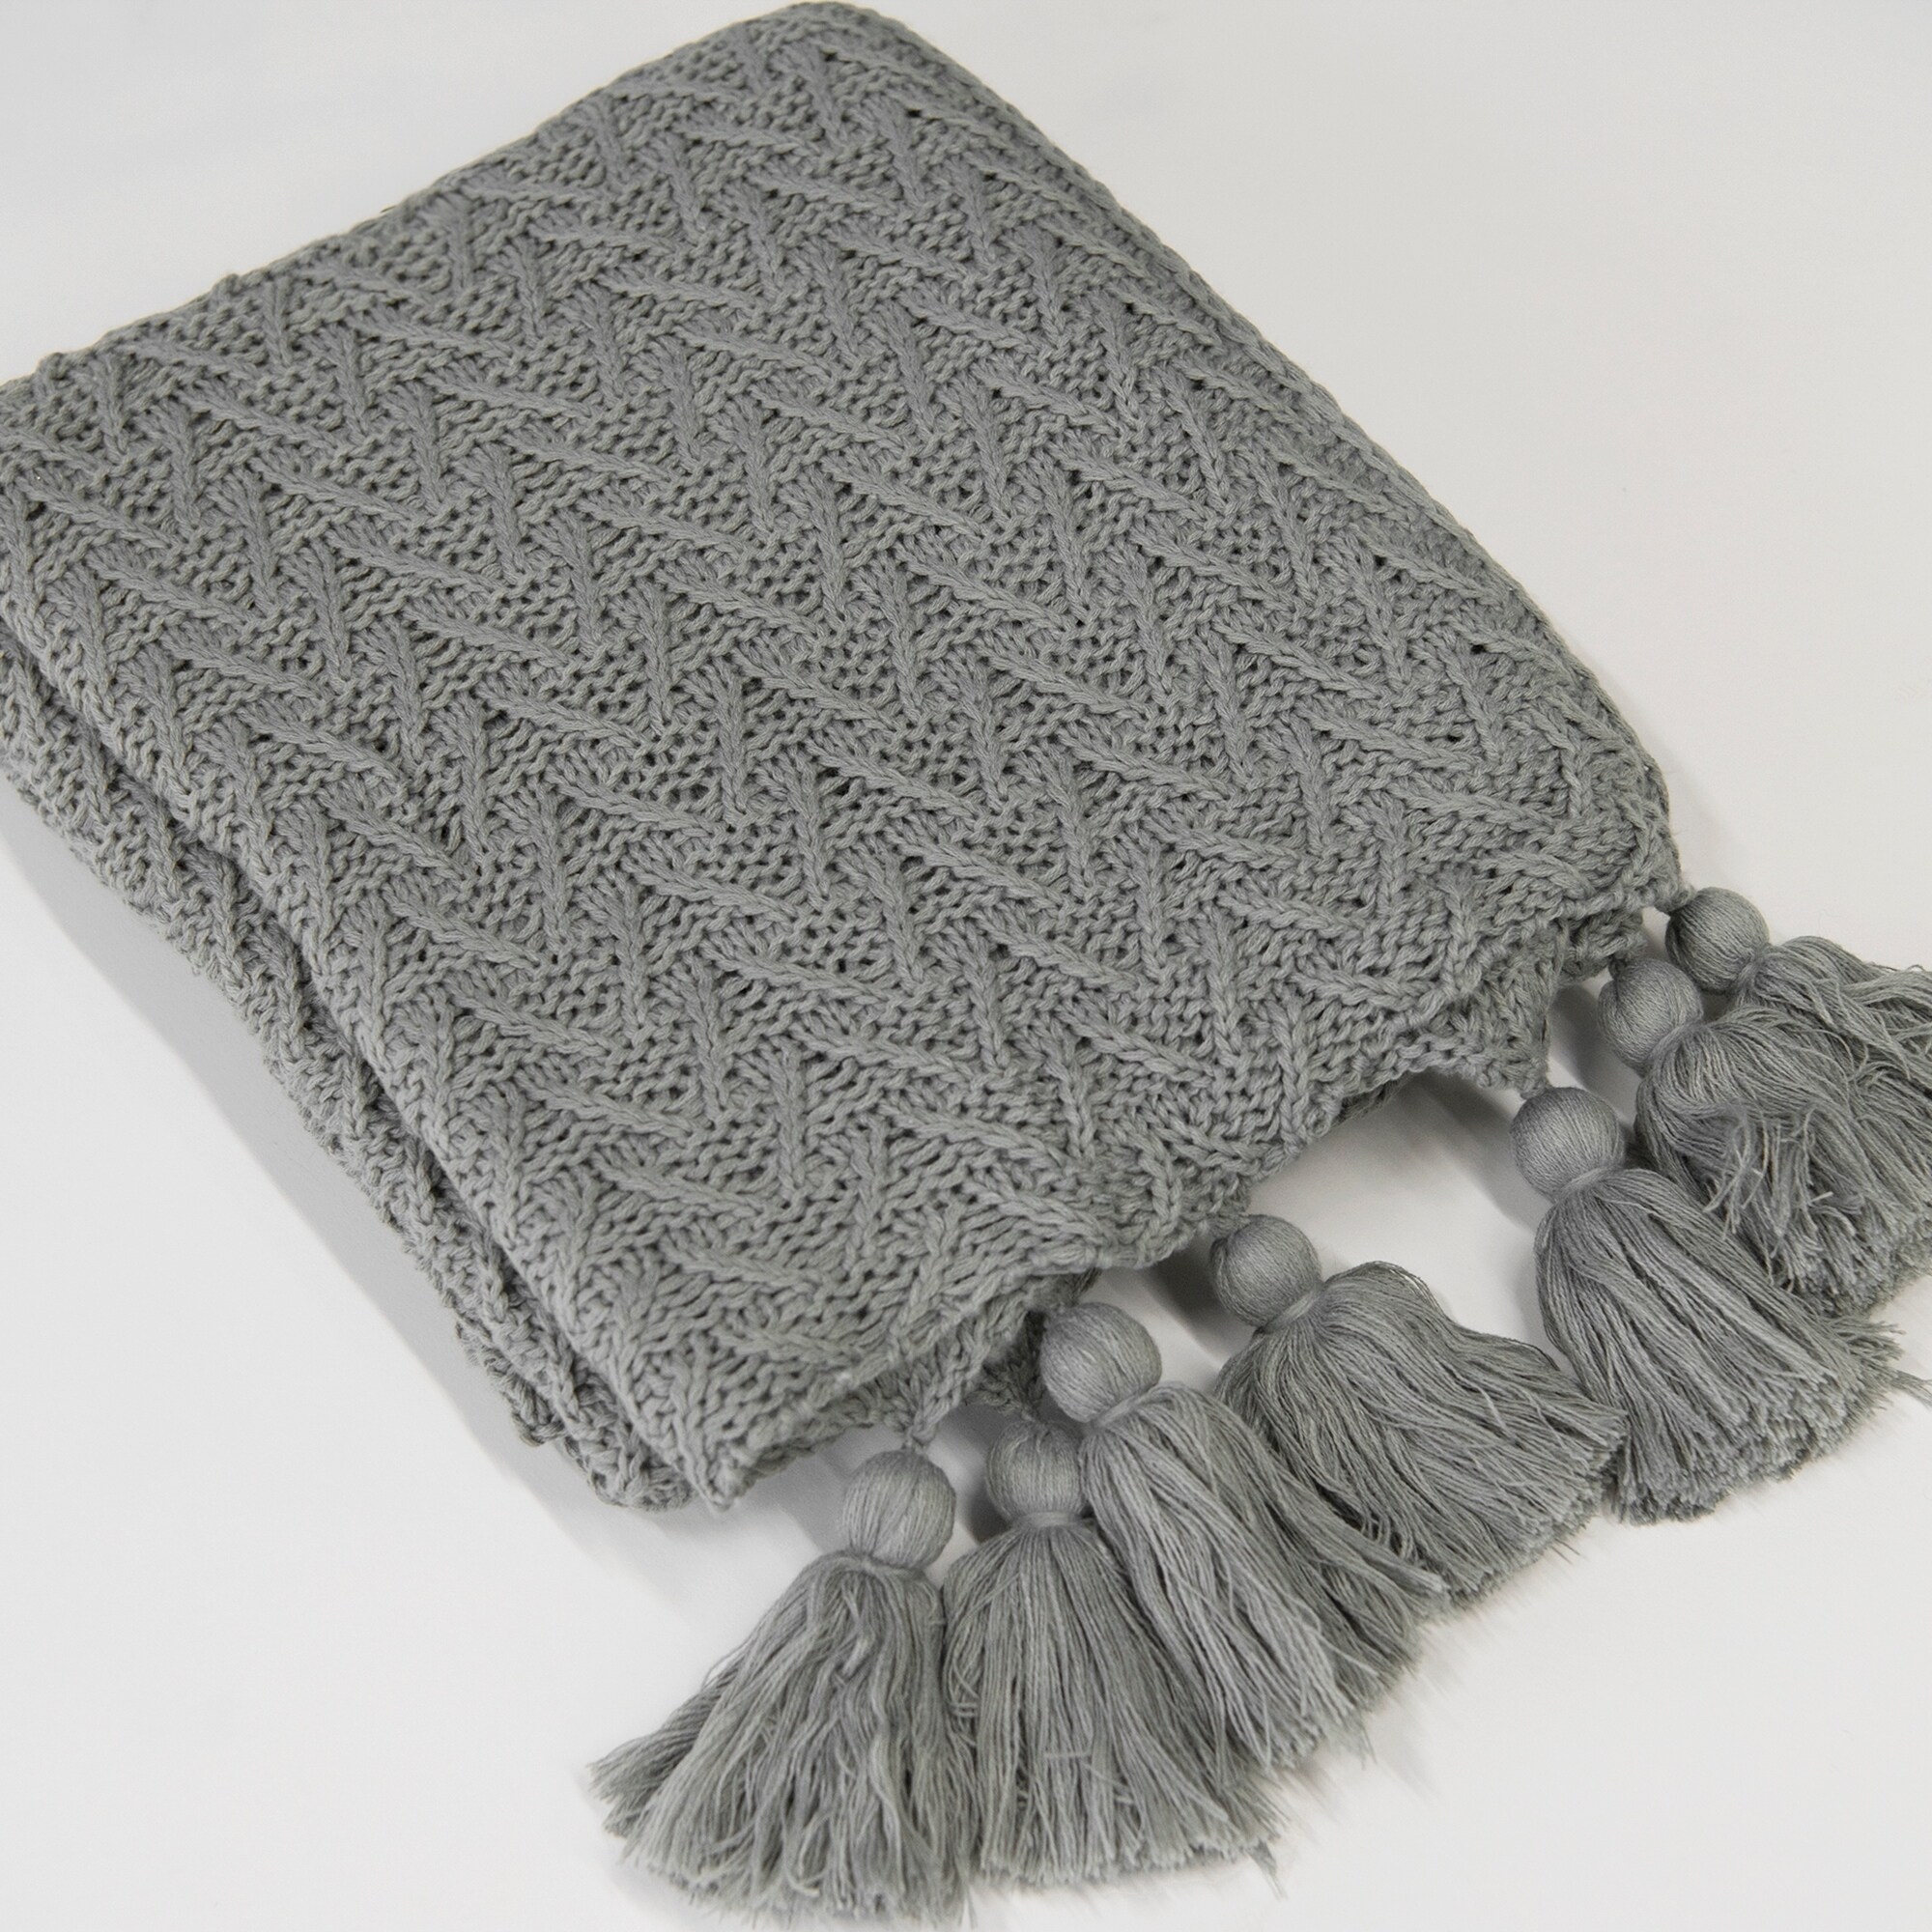 Aurora Home Knit Tassel Acrylic Throw Blanket Overstock 18218253 Grey